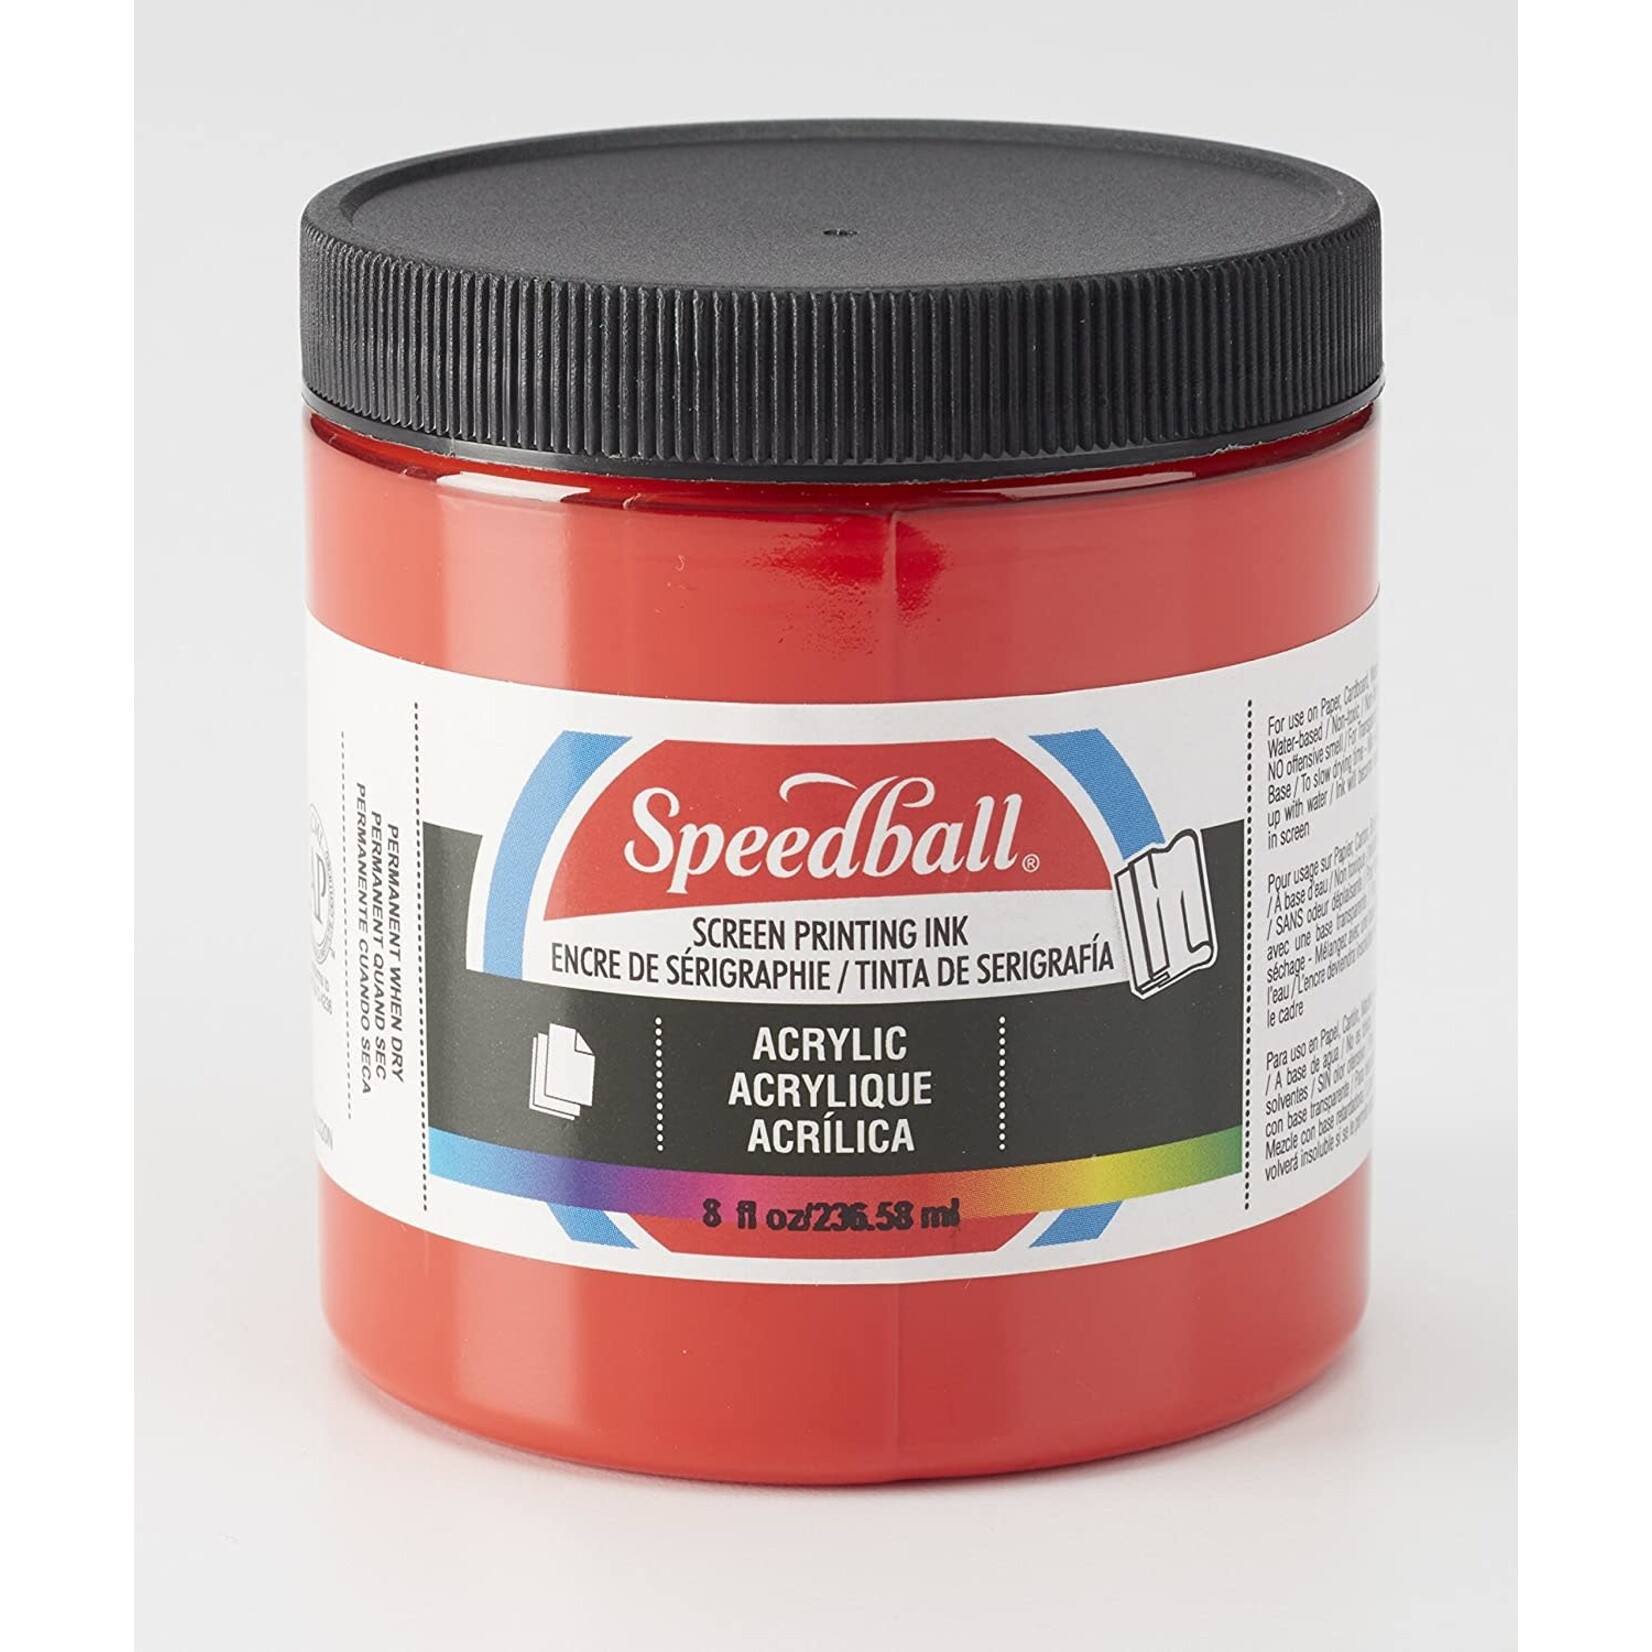 Speedball Acrylic Screen Printing Ink Medium Red 8oz